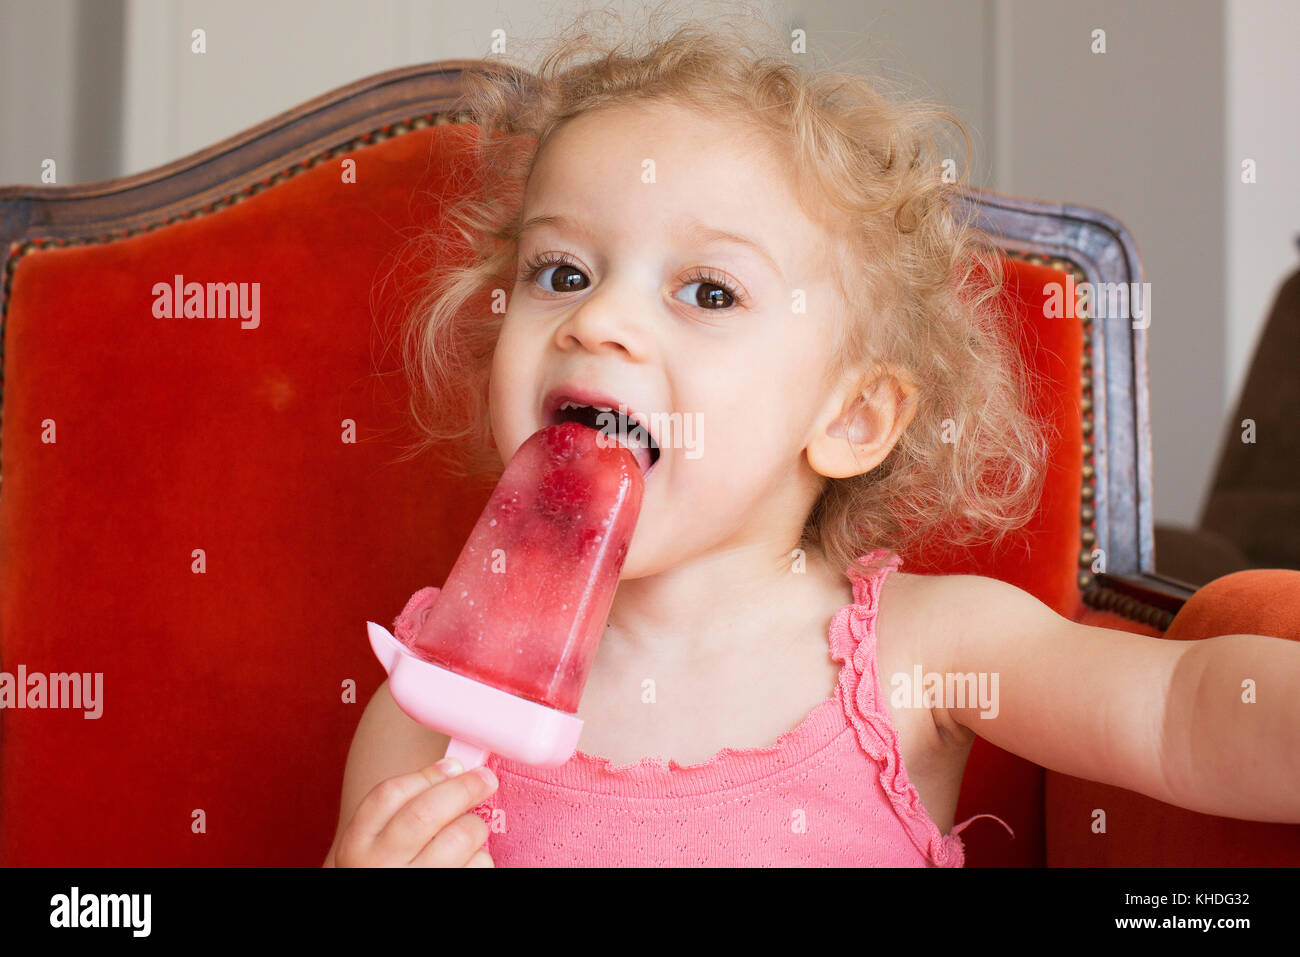 Little girl eating popsicle Banque D'Images